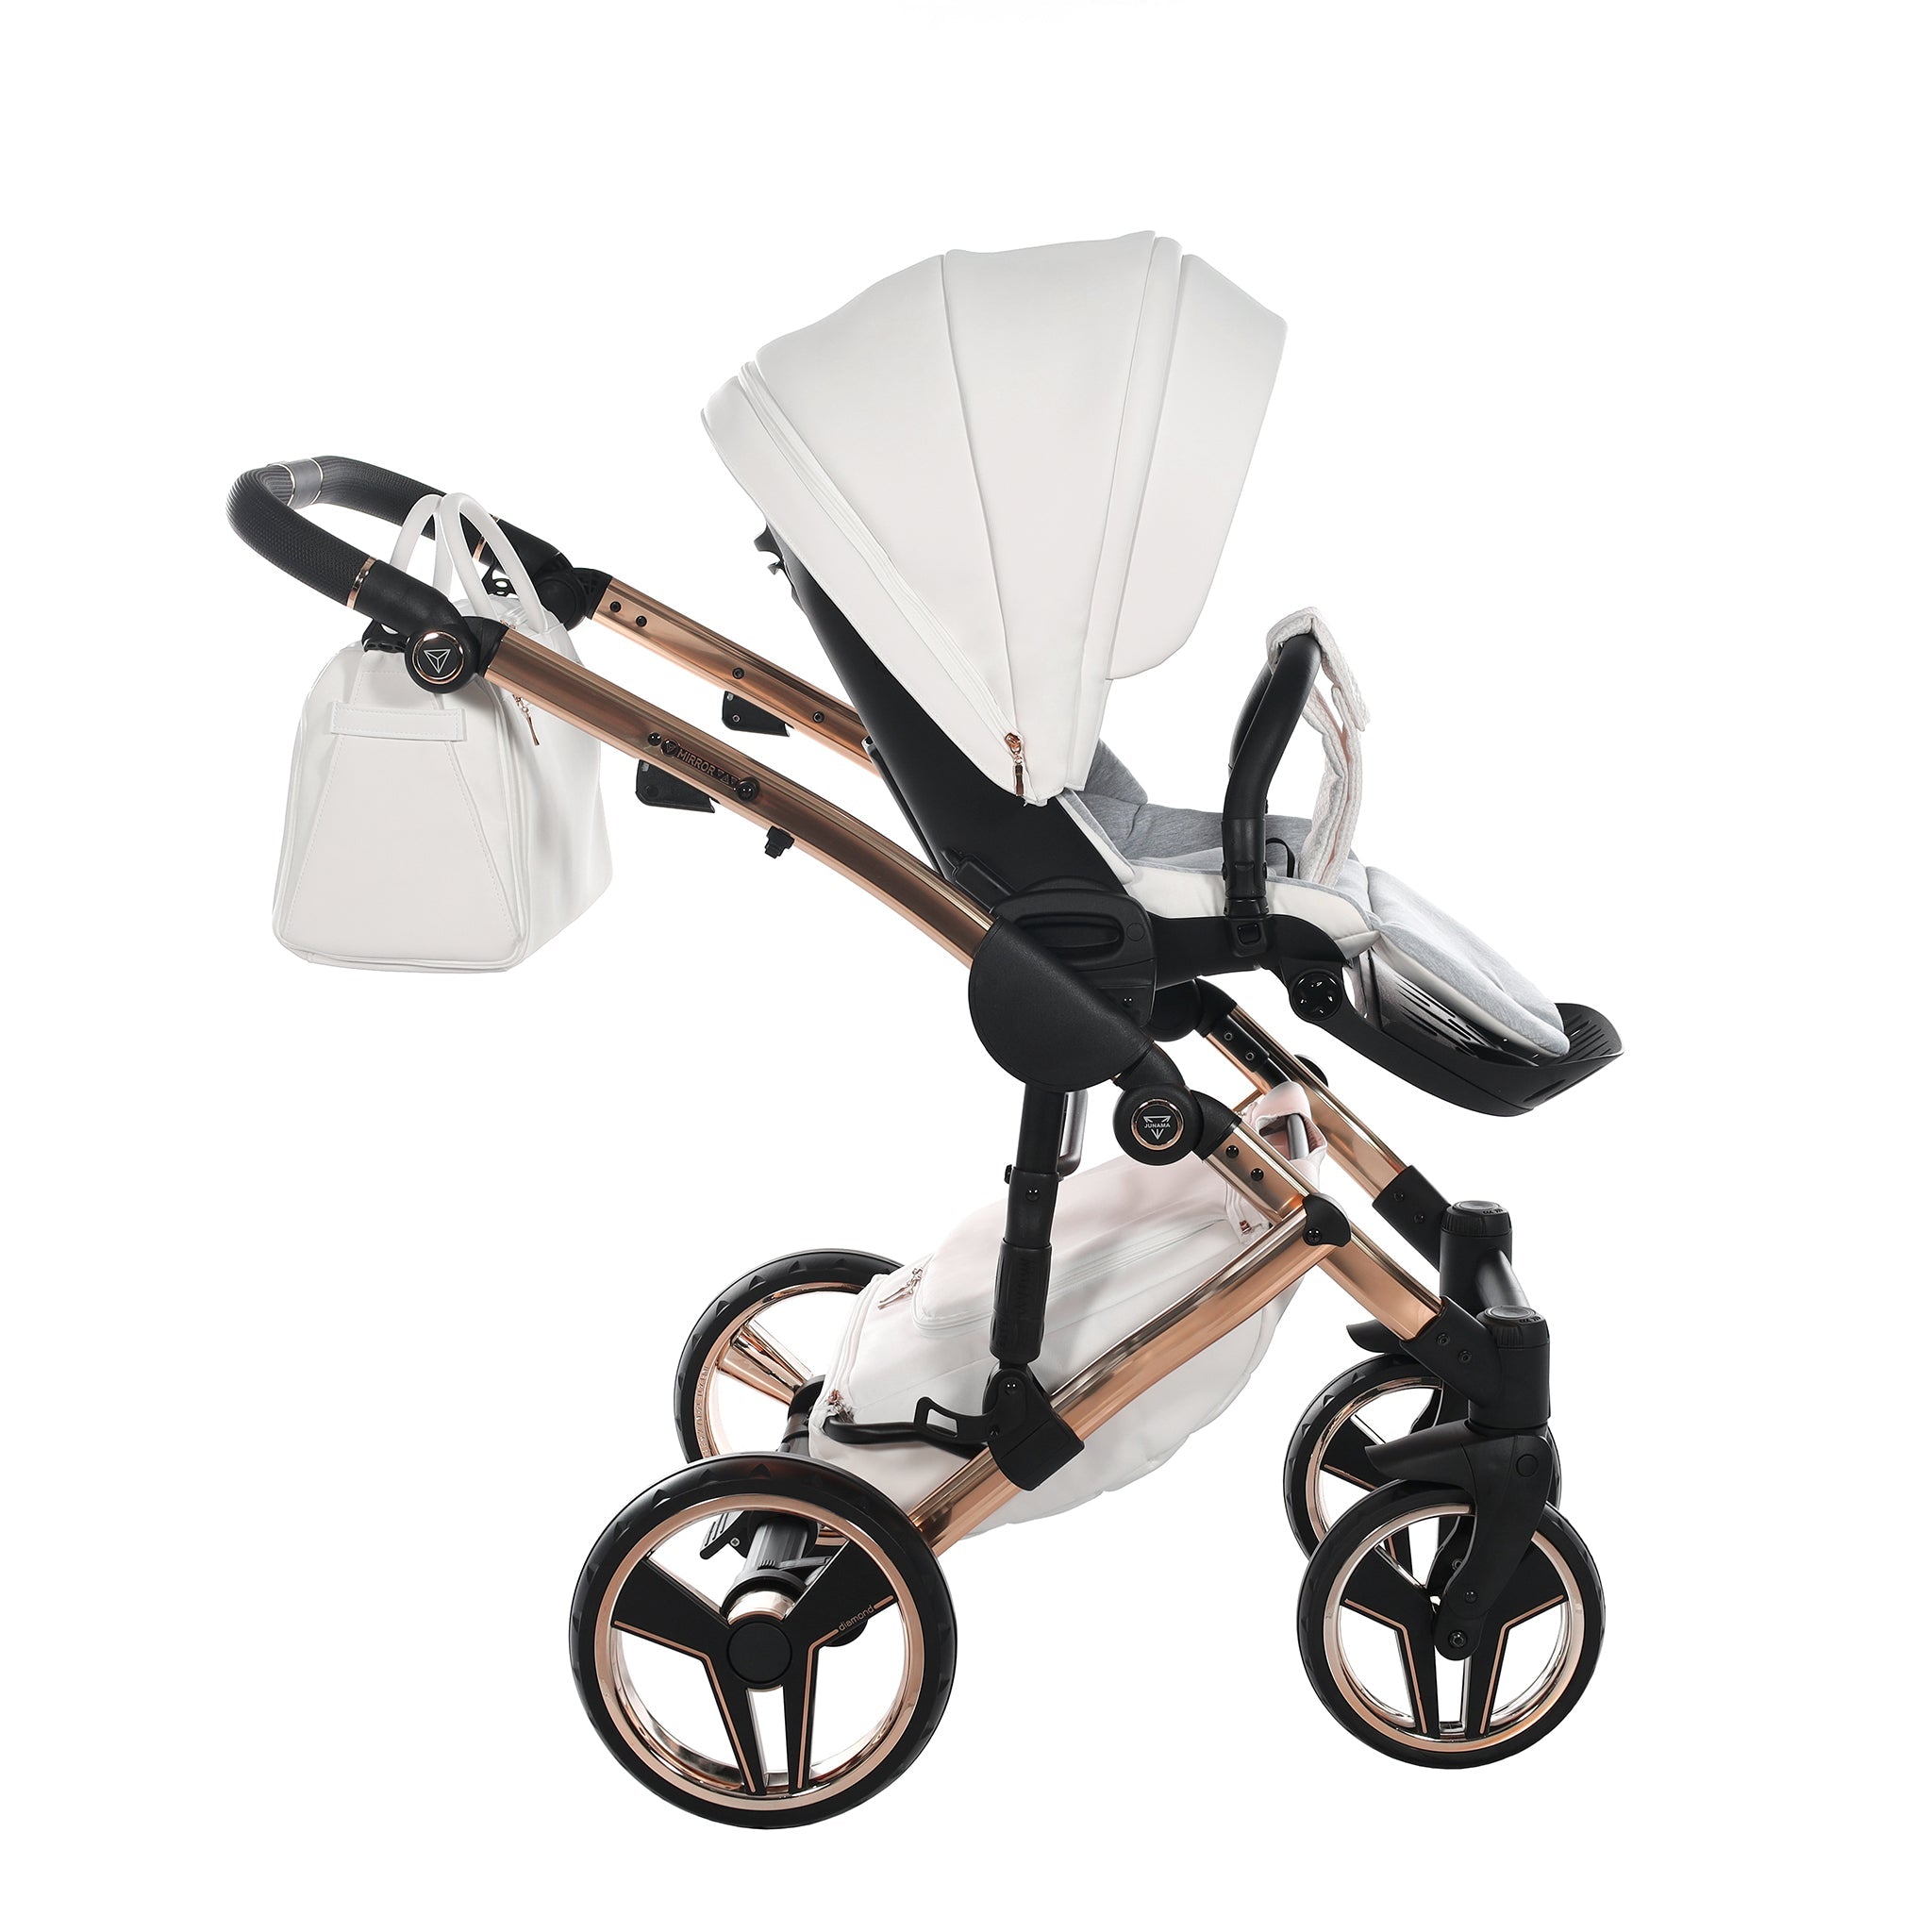 Junama Mirror, baby prams or stroller 2 in 1 - Copper chrome and Rose Gold, Code number: JUNMIR05